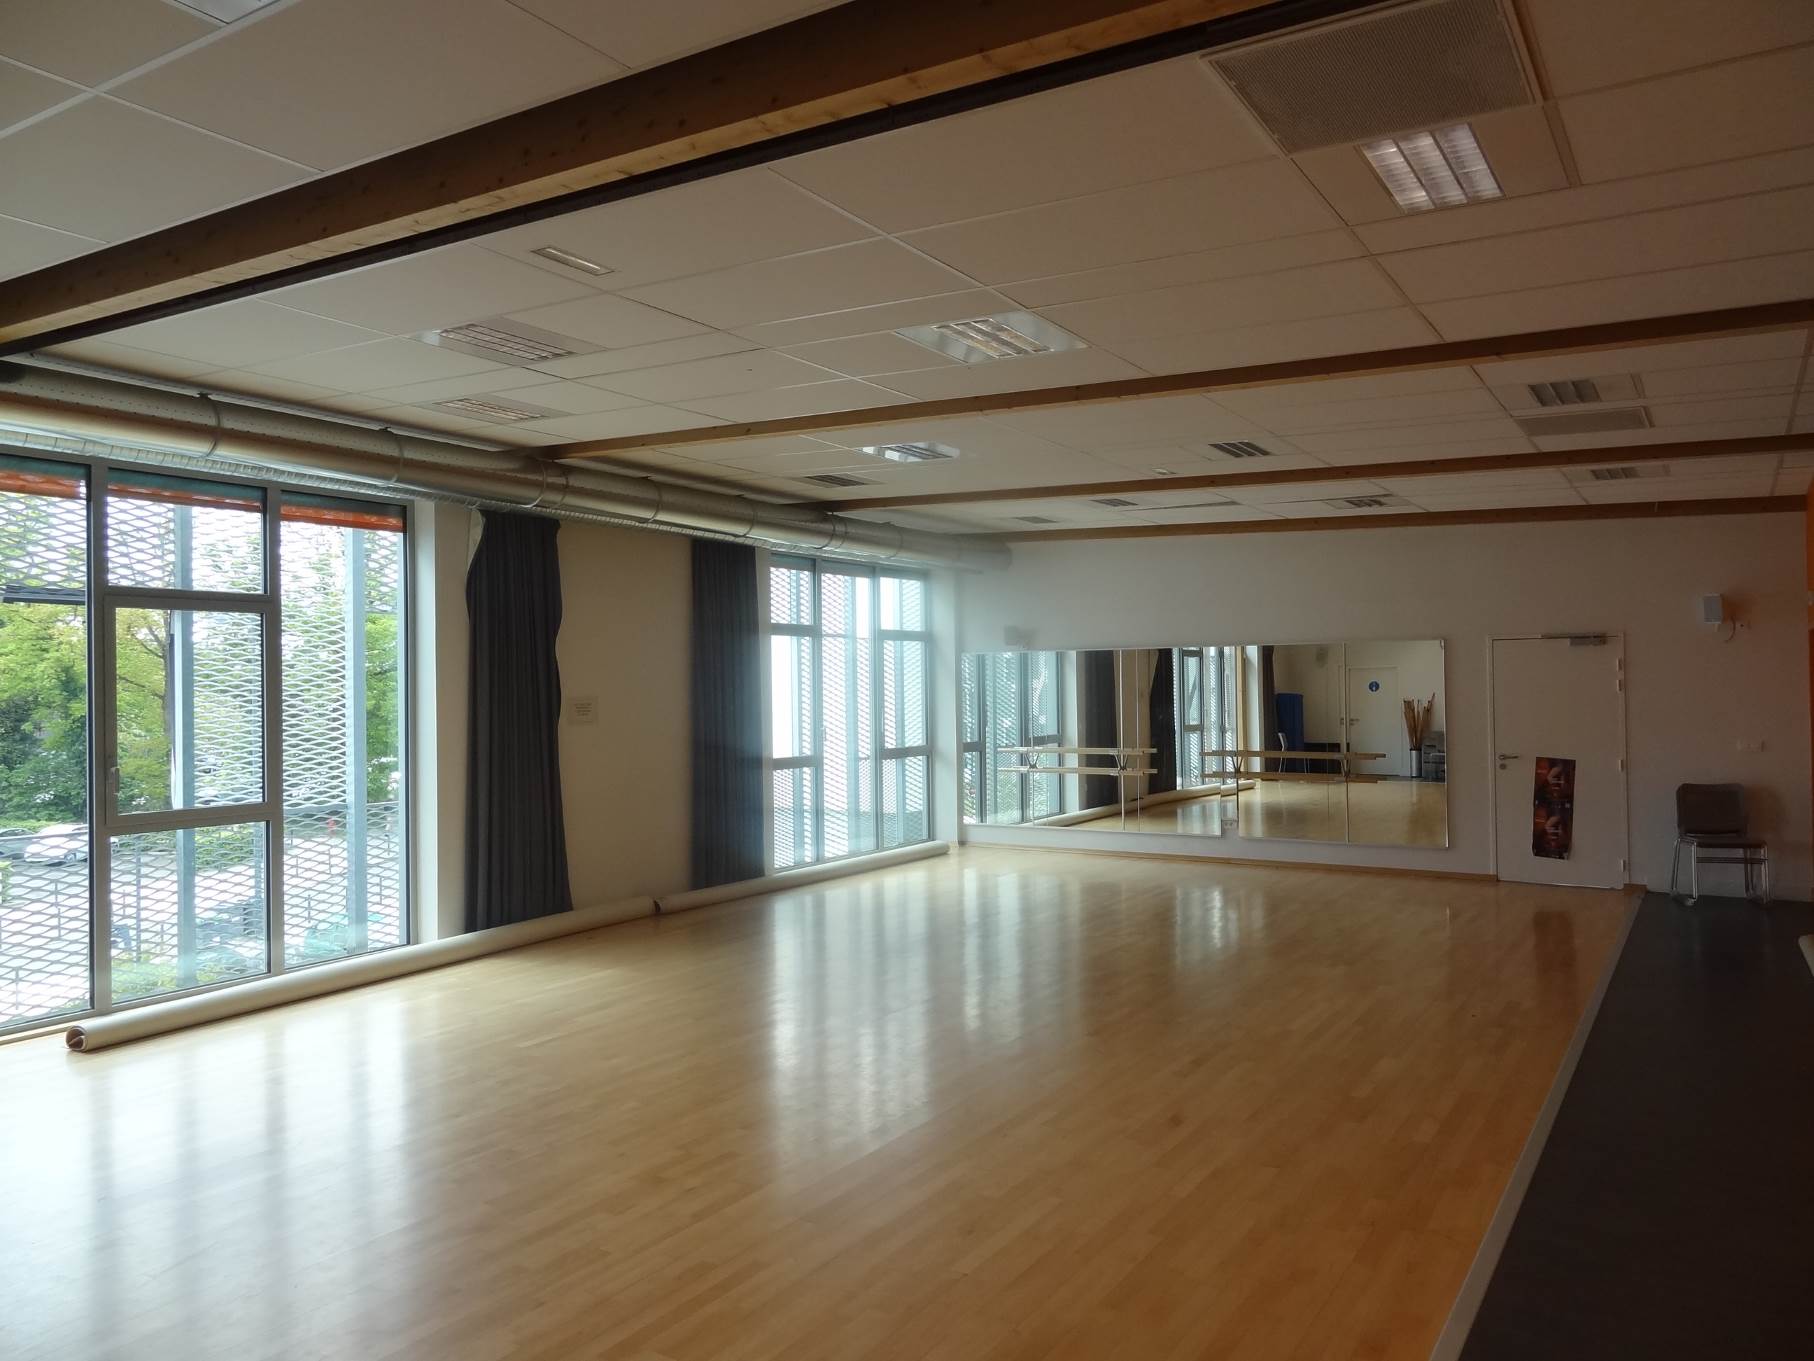 Salle de danse photo 1